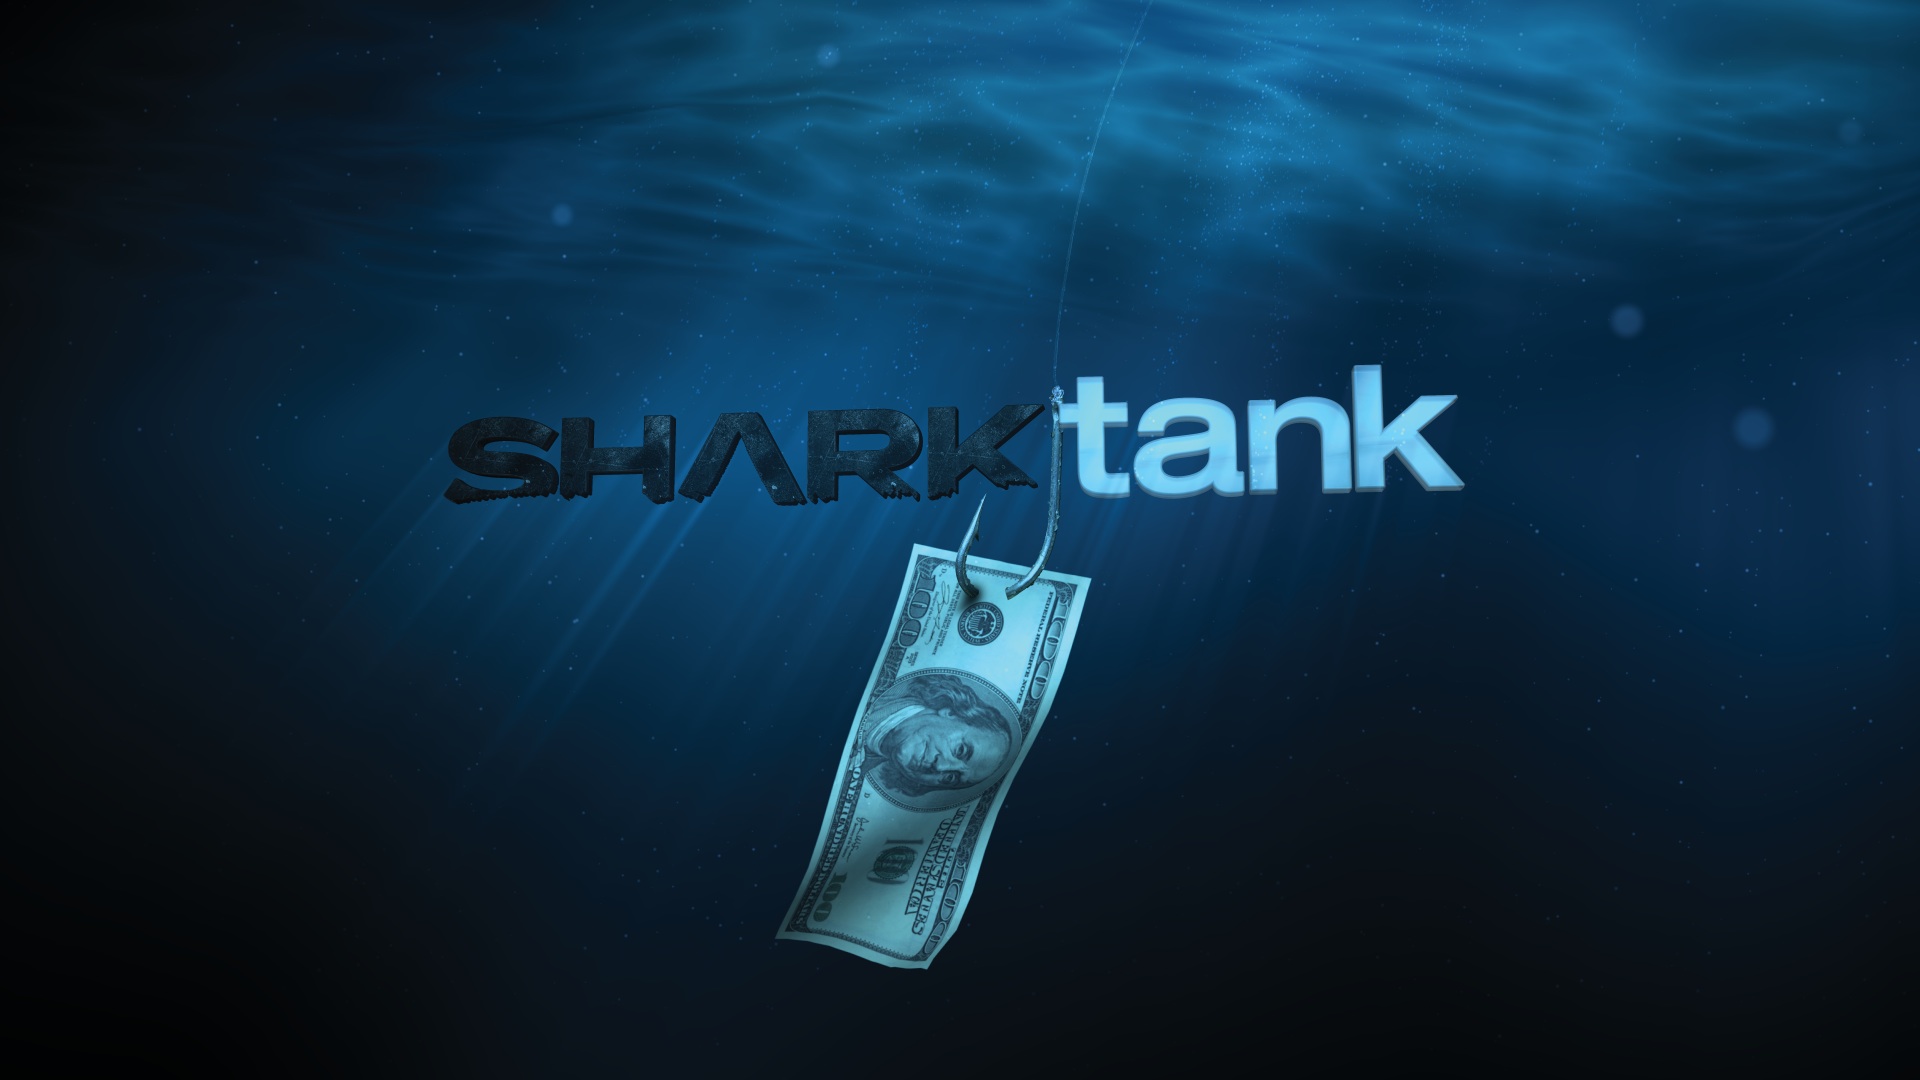 Shark Tank Themed HD Desktop Wallpaper